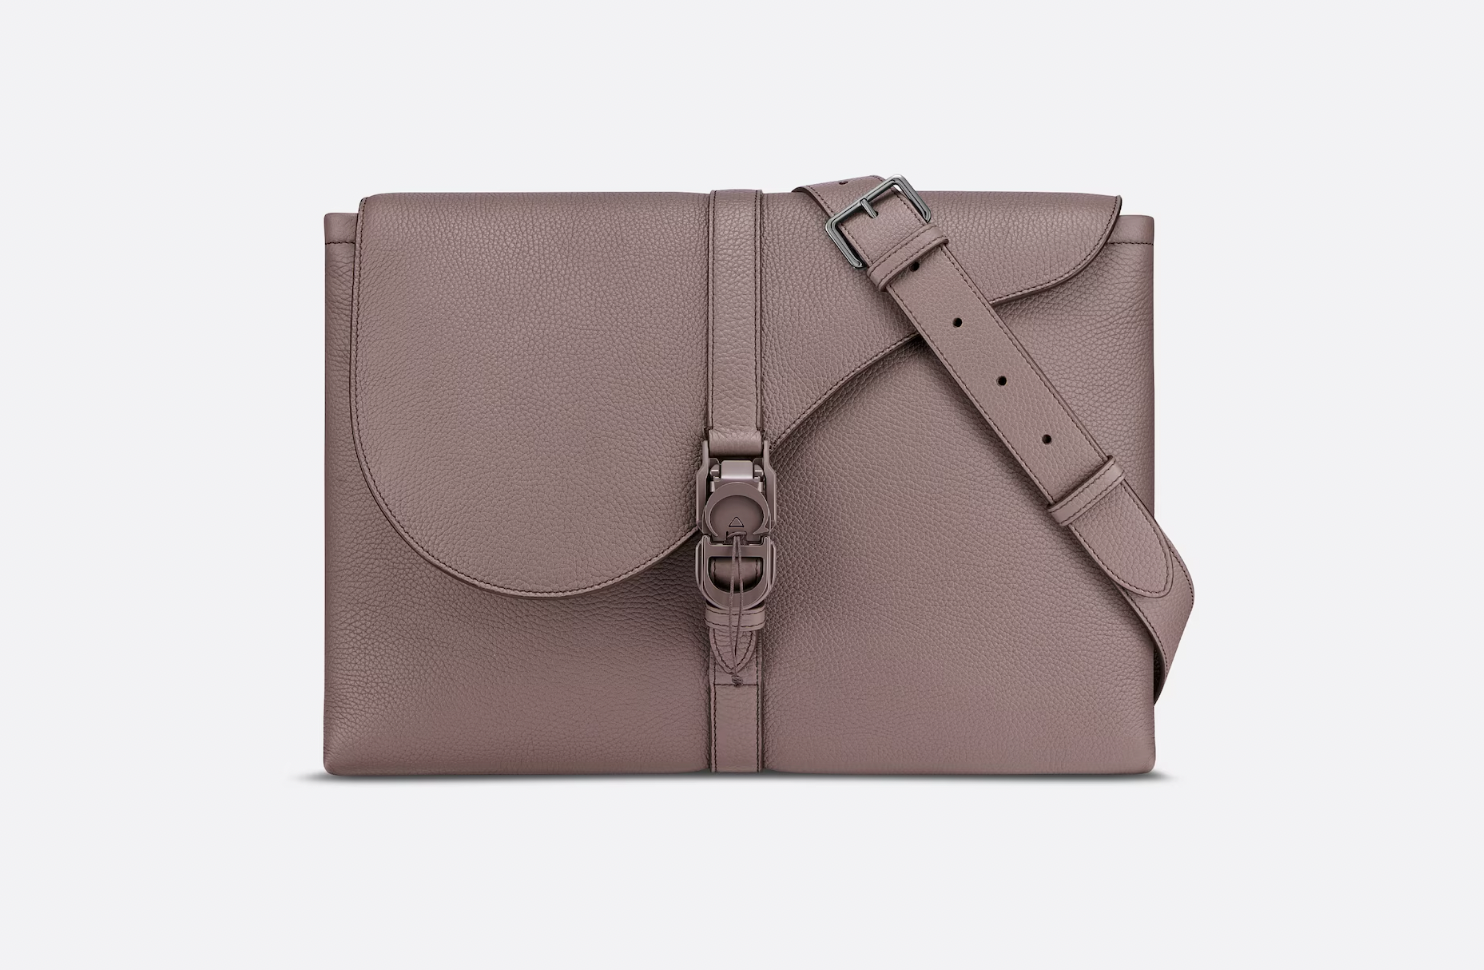 Pillow Bag de Dior, el nuevo objeto de deseo